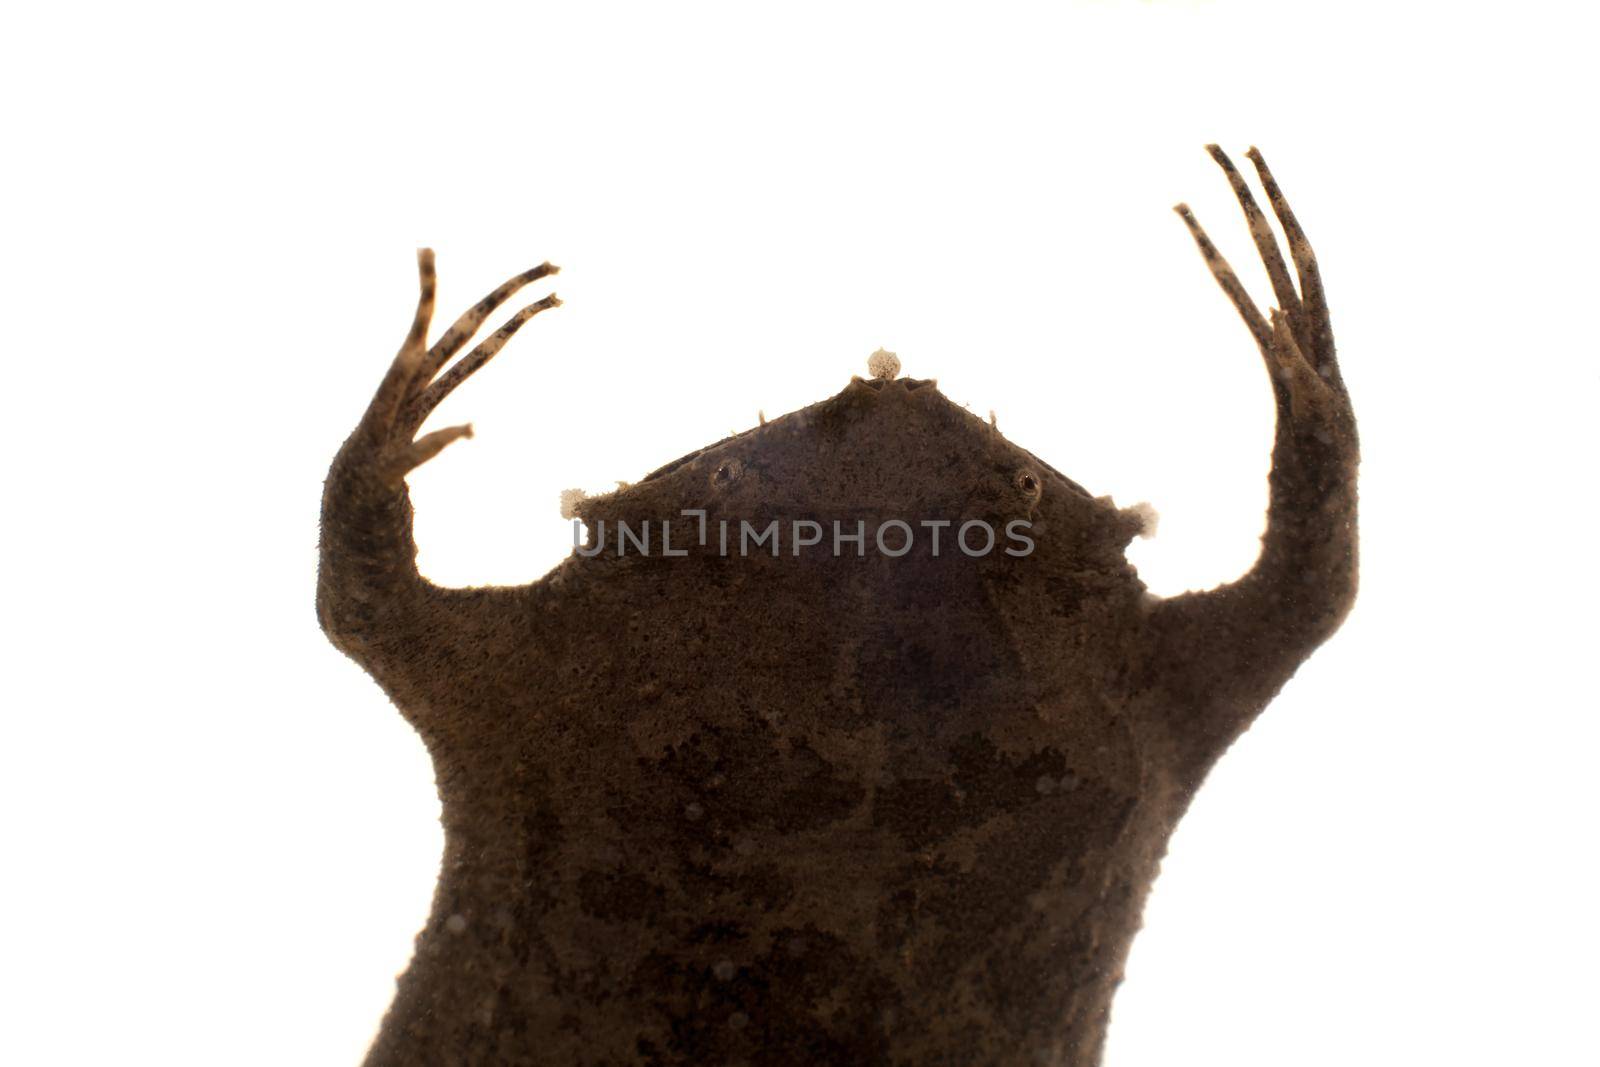 A strange Surinam toad on white backround by RosaJay